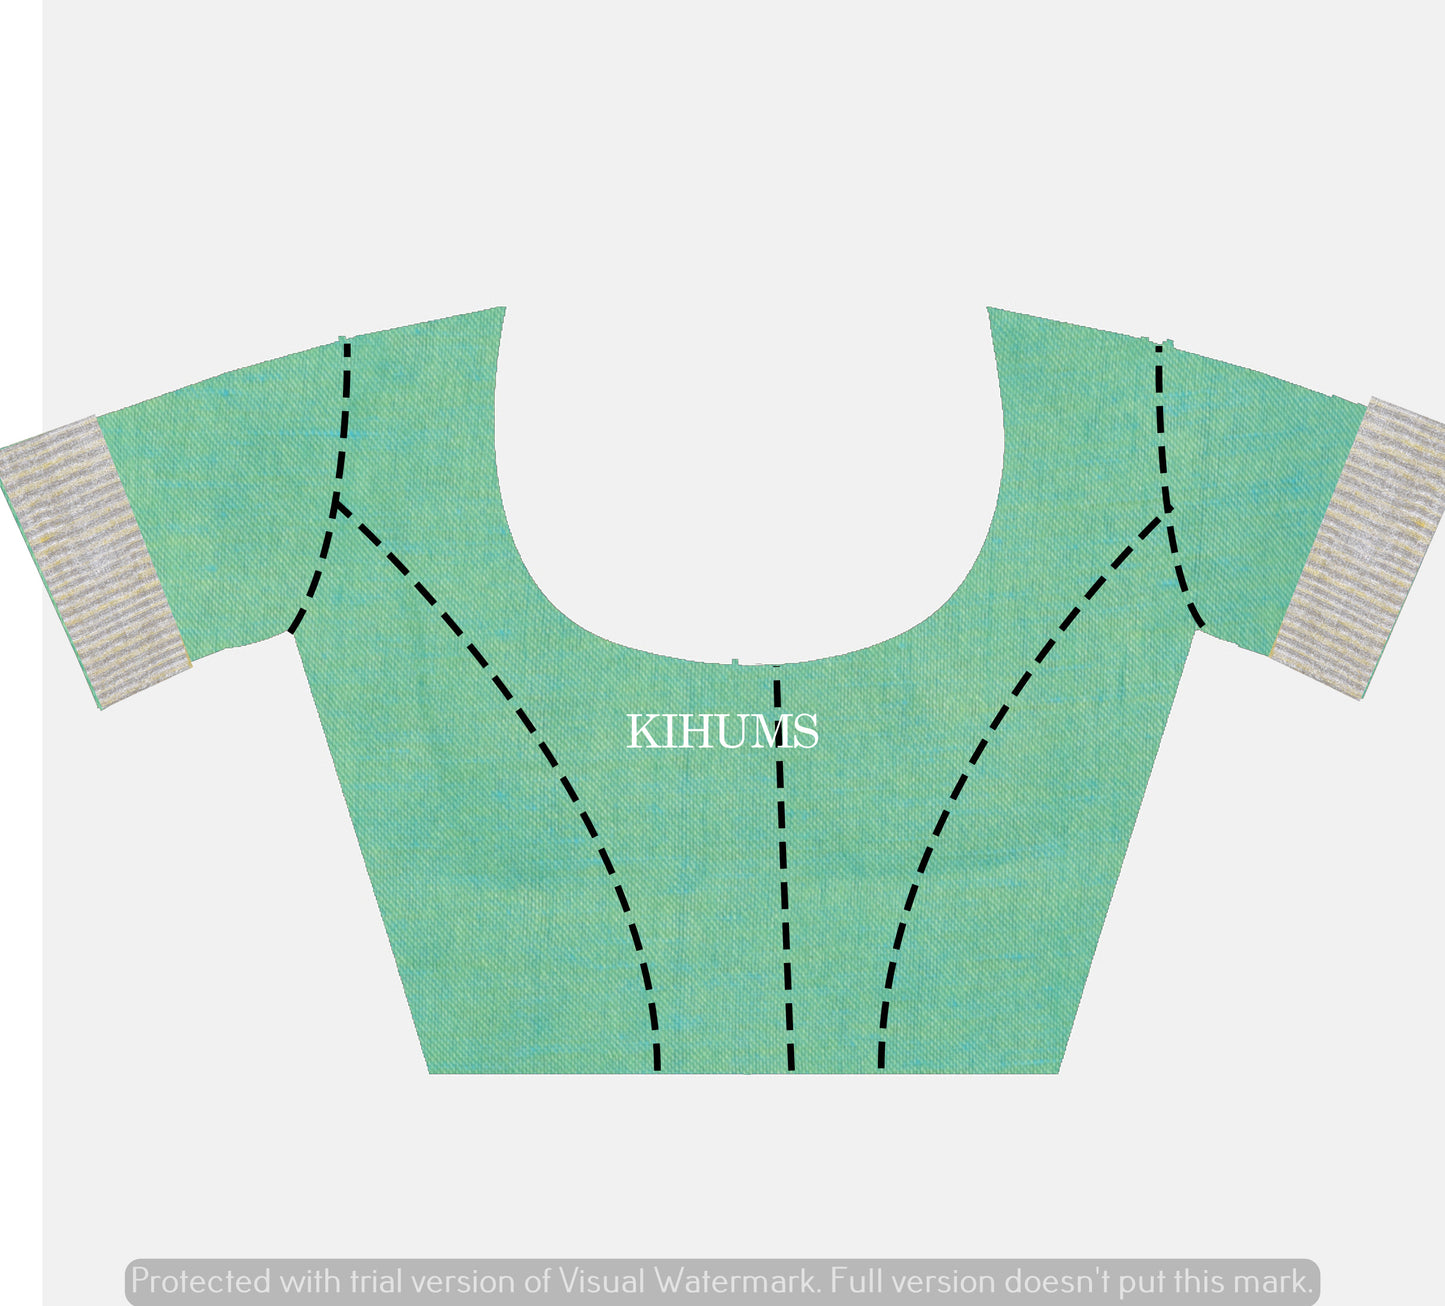 Turquoise shade Handwoven Linen Saree | Contrast Blouse | KIHUMS Saree